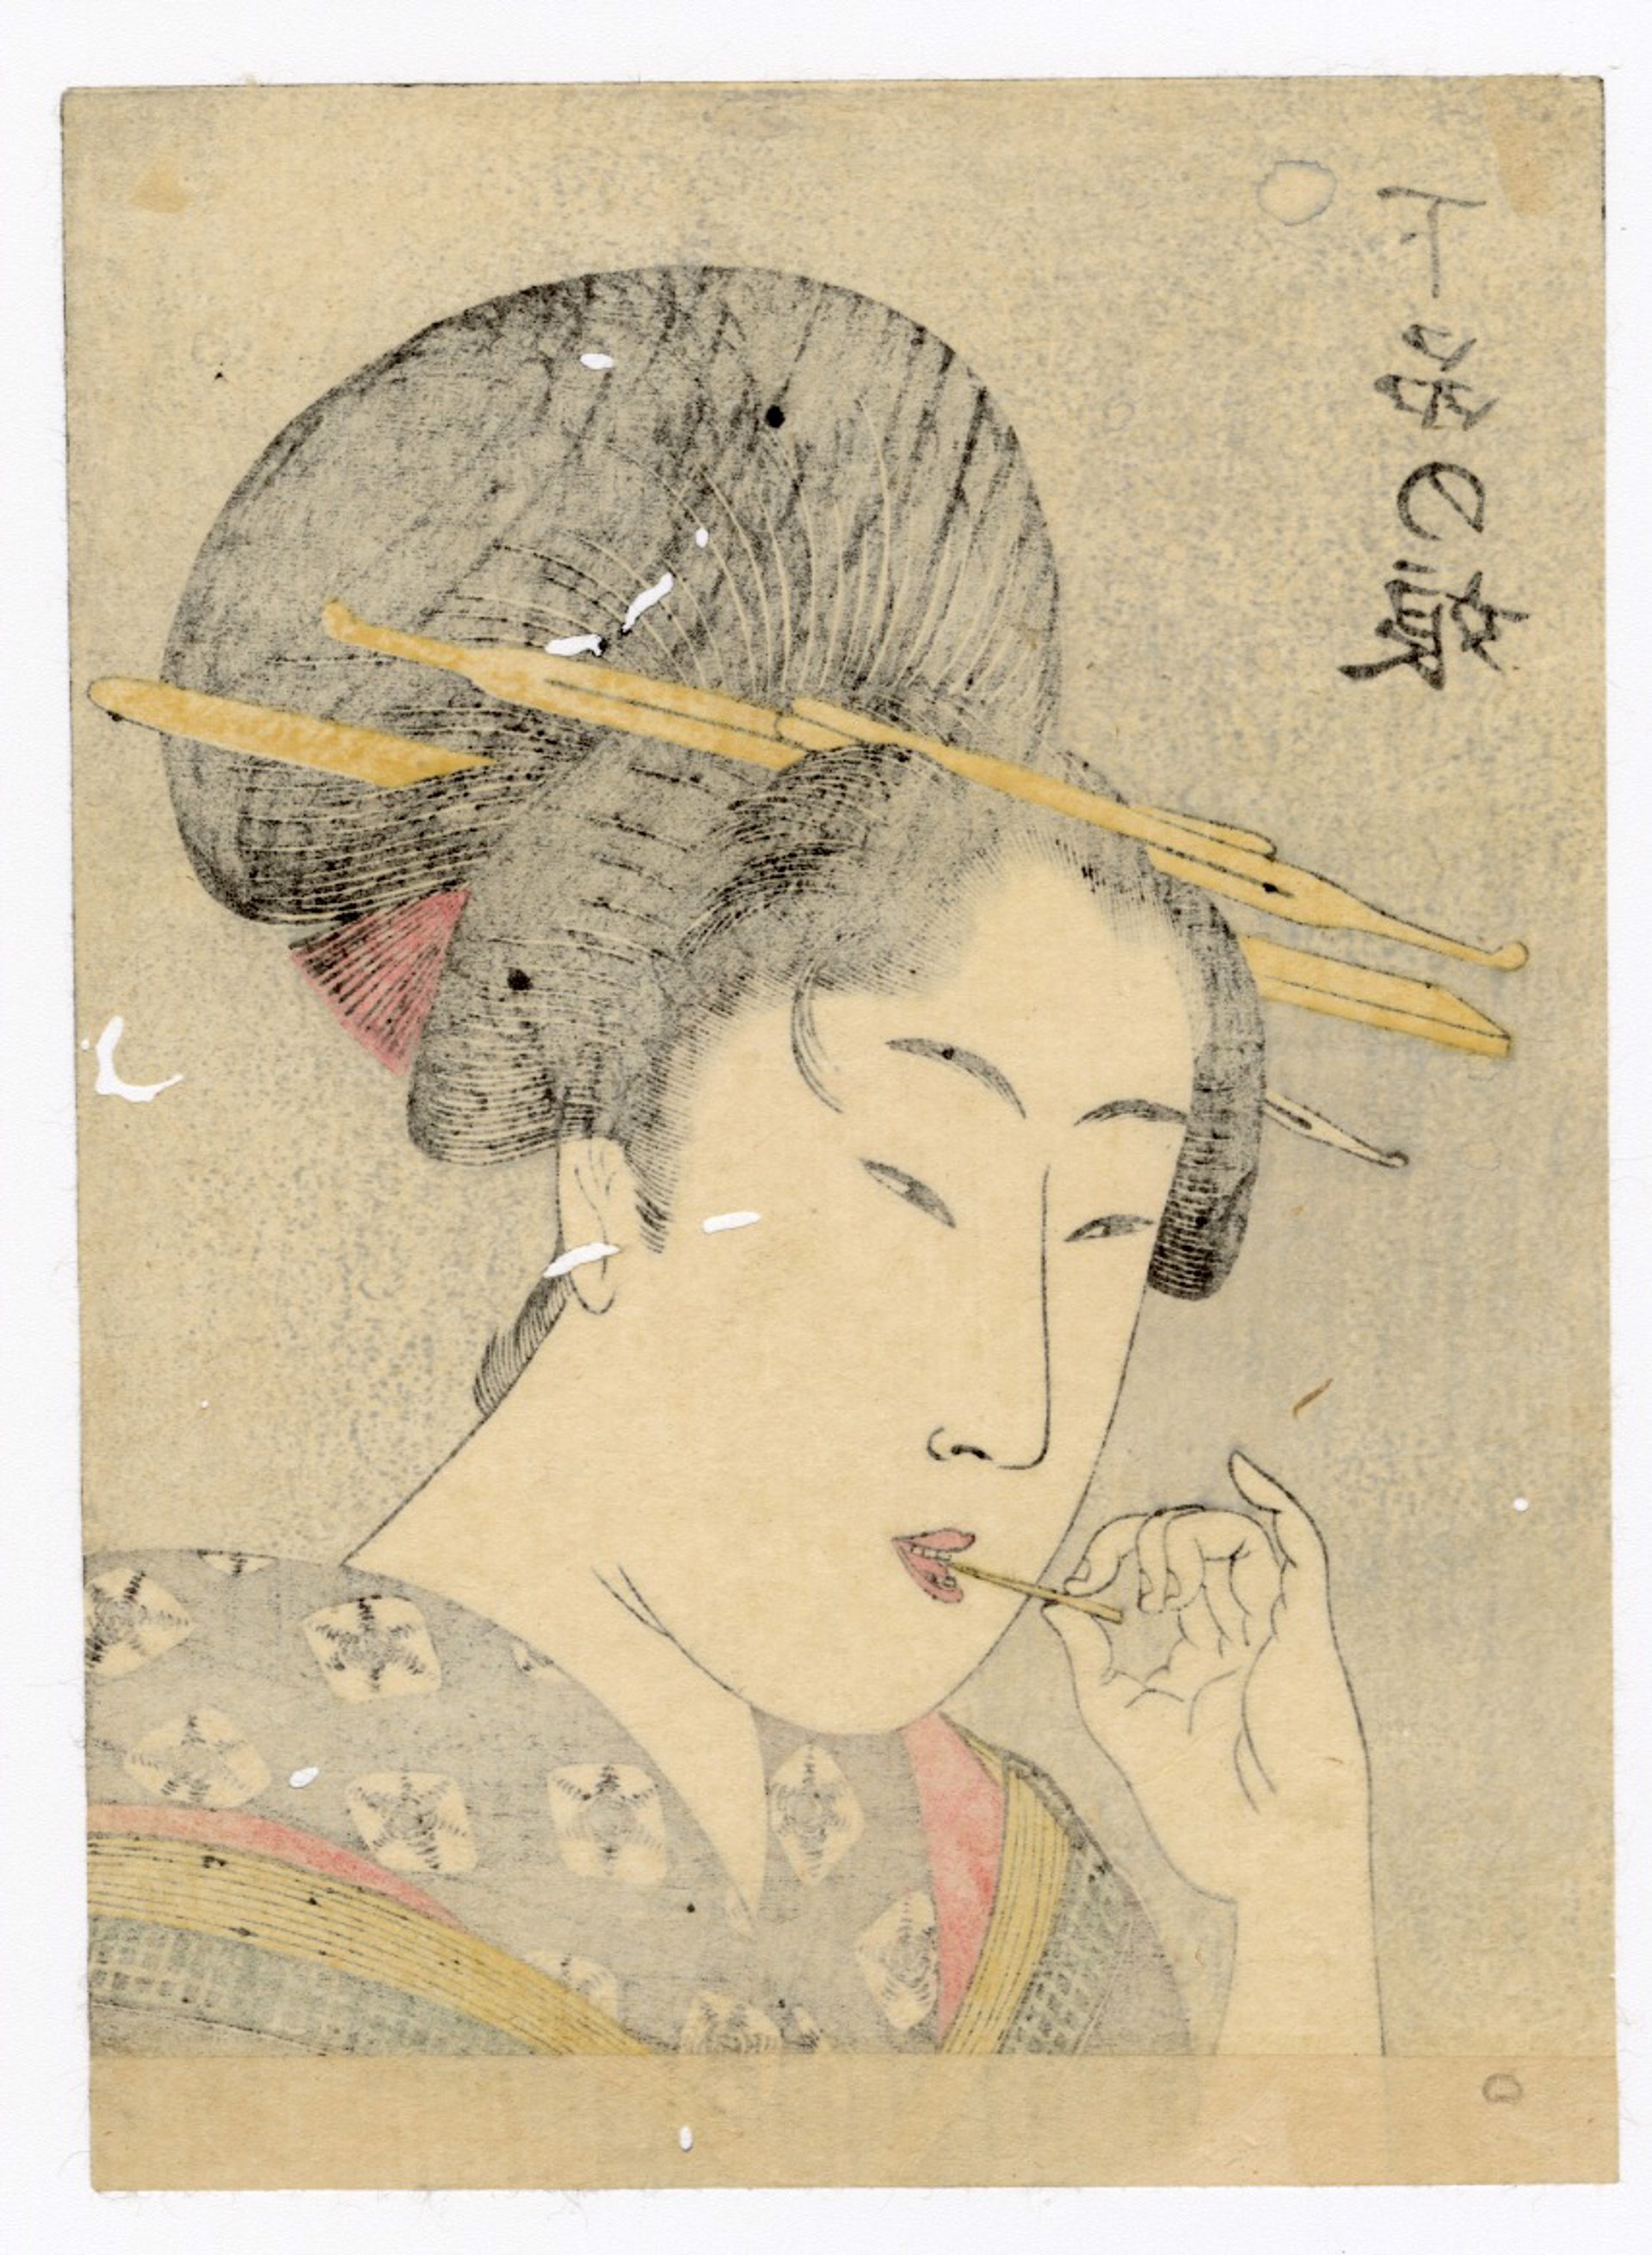 Vulgar Girl (Gehin Musume) by Utamaro